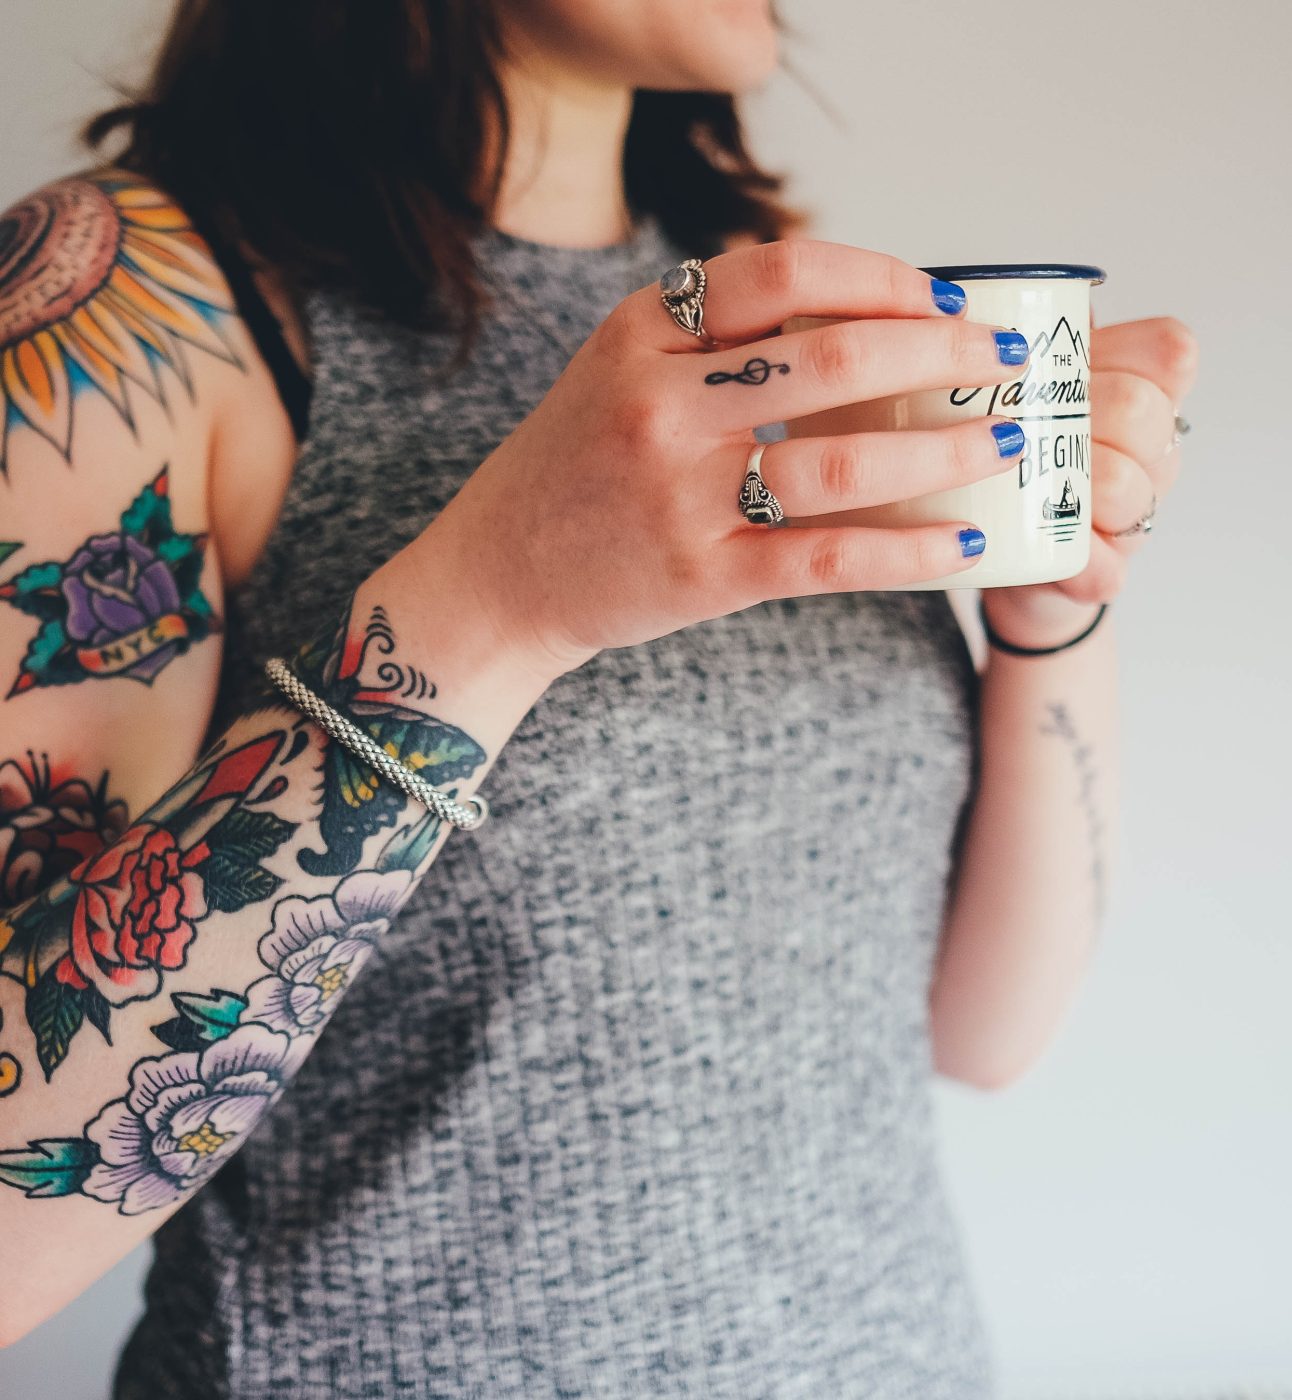 Tattooed lady holding a mug